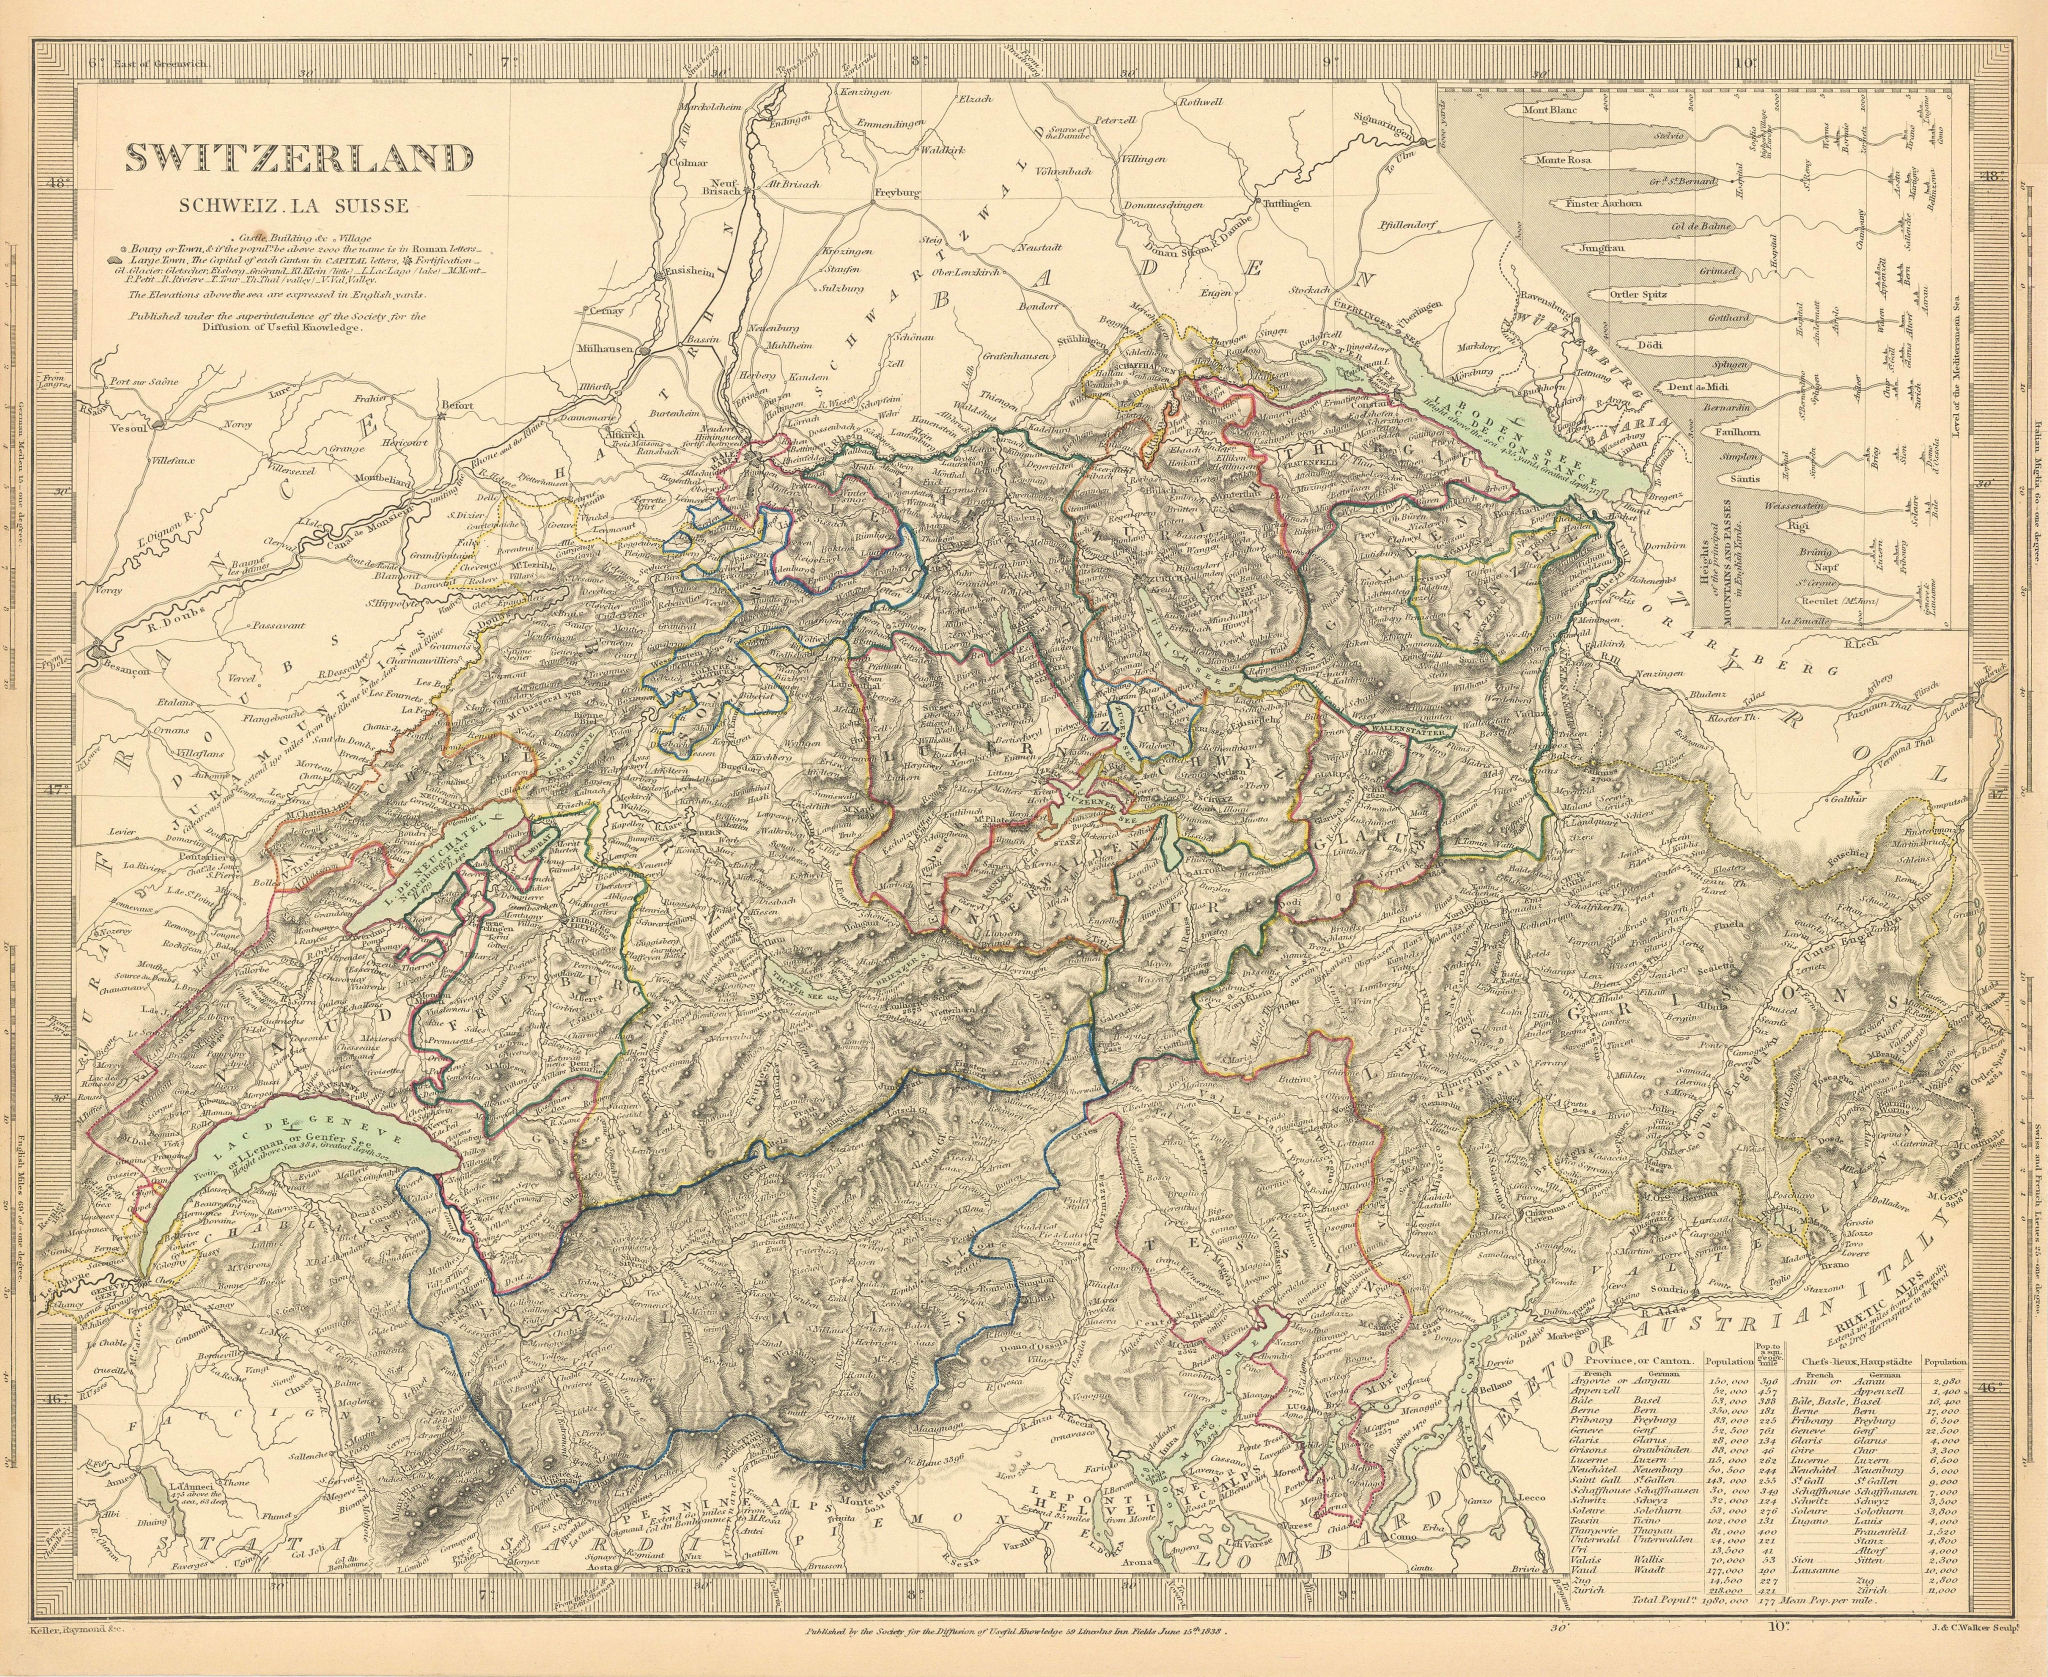 SWITZERLAND SCHWEIZ LA SUISSE.Inset heights of mountains, passes.SDUK 1844 map